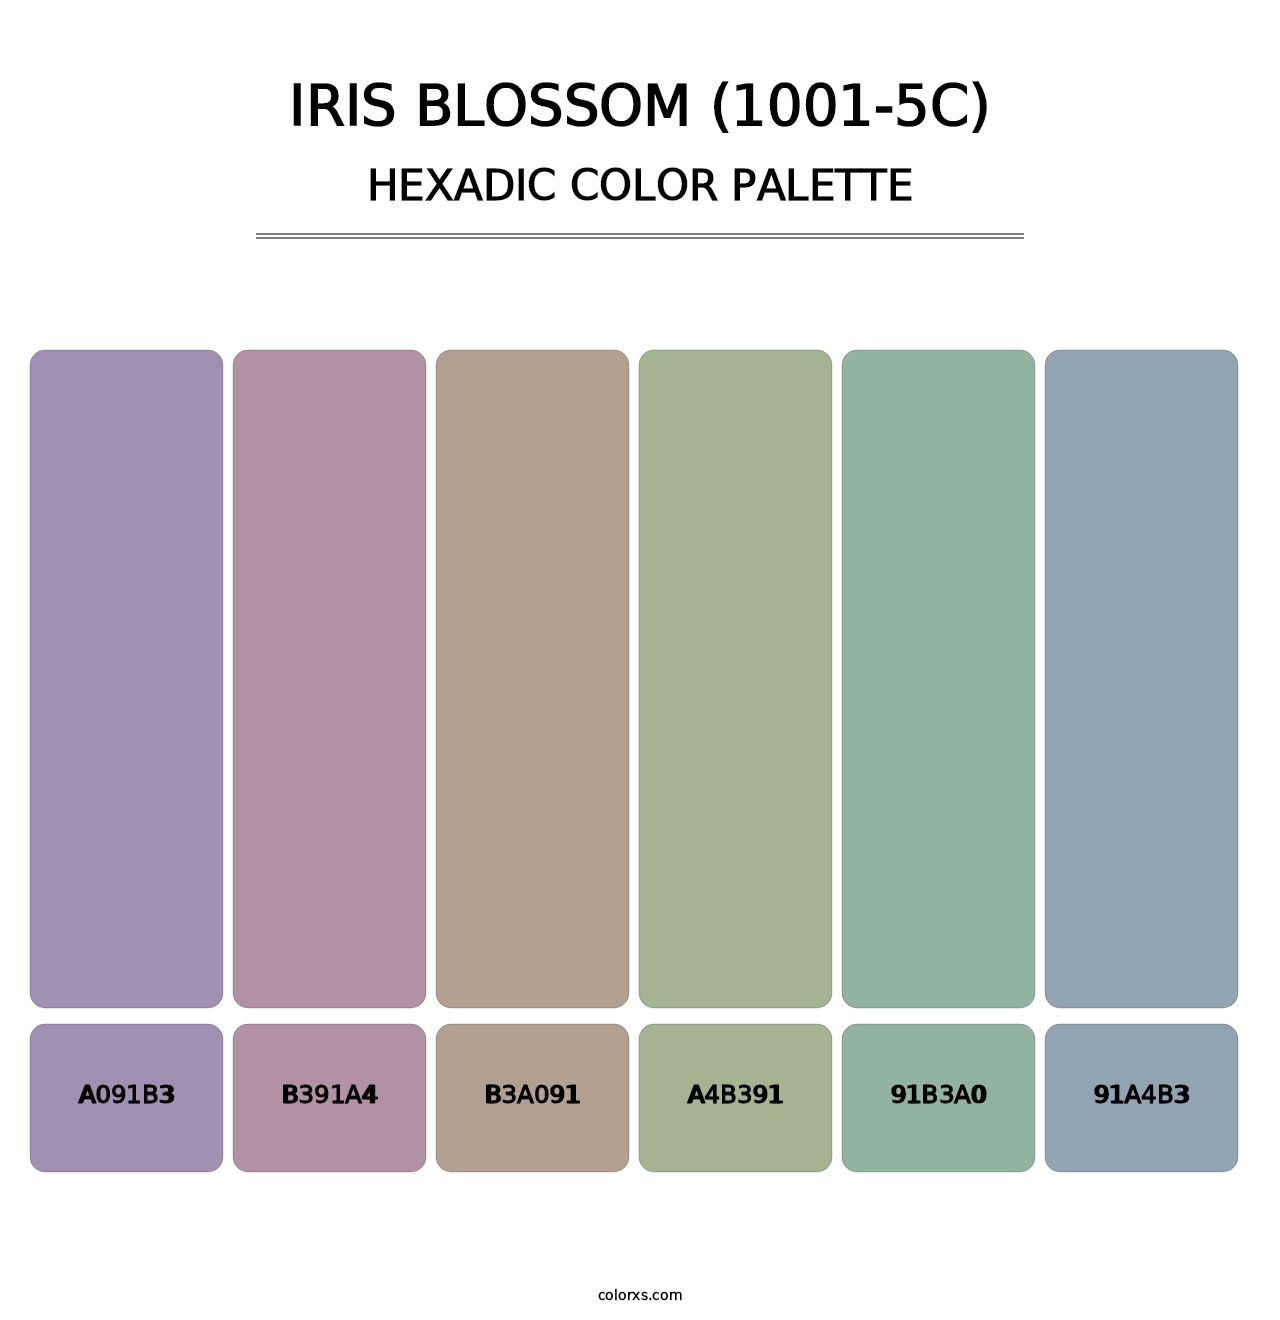 Iris Blossom (1001-5C) - Hexadic Color Palette